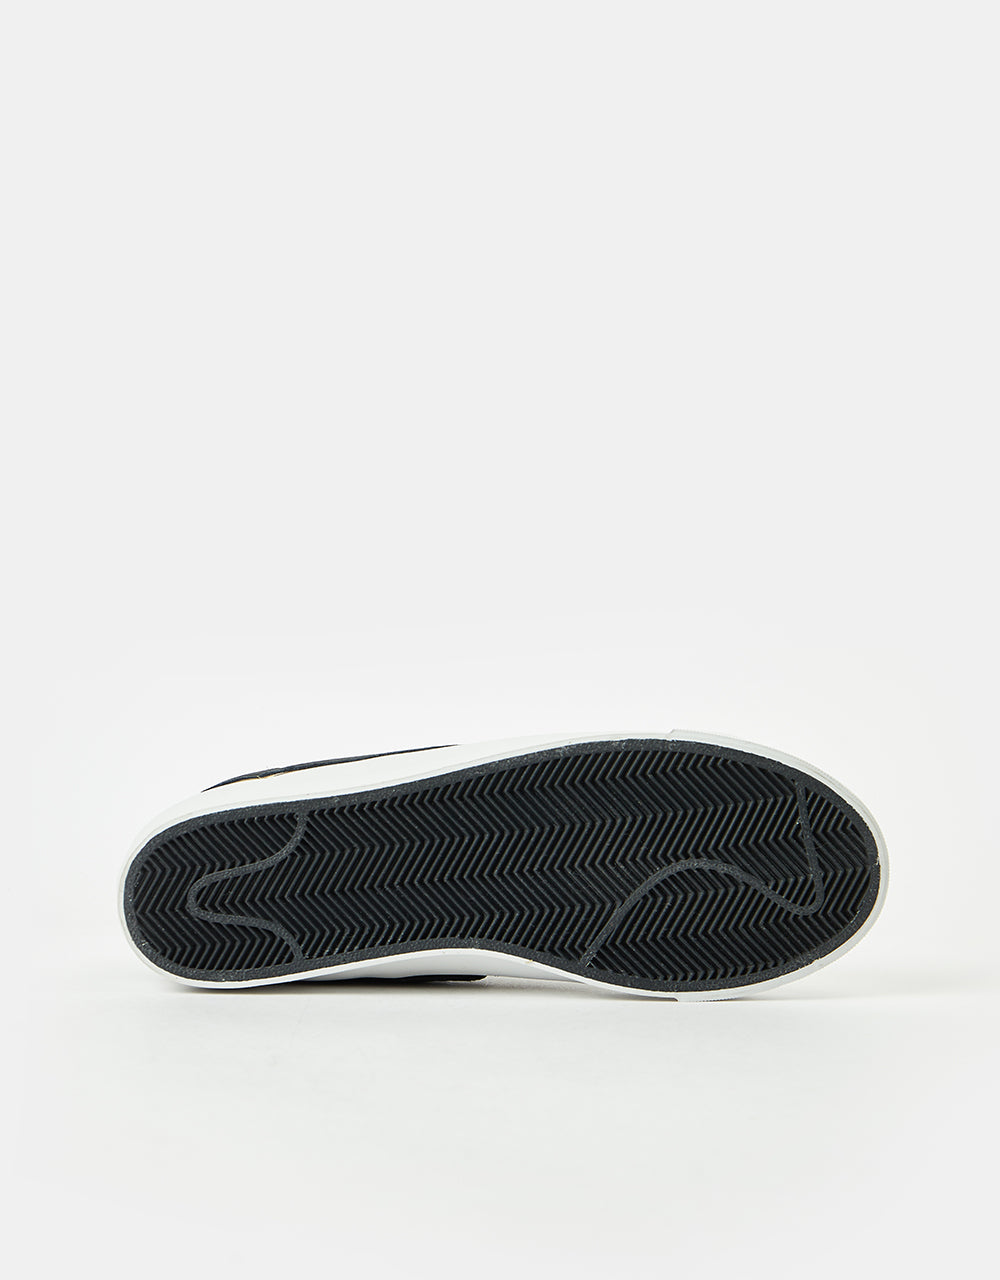 Nike SB Blazer Low Pro GT Premium Skate Shoes - Black/Safety Orange-Black-Photon Dust